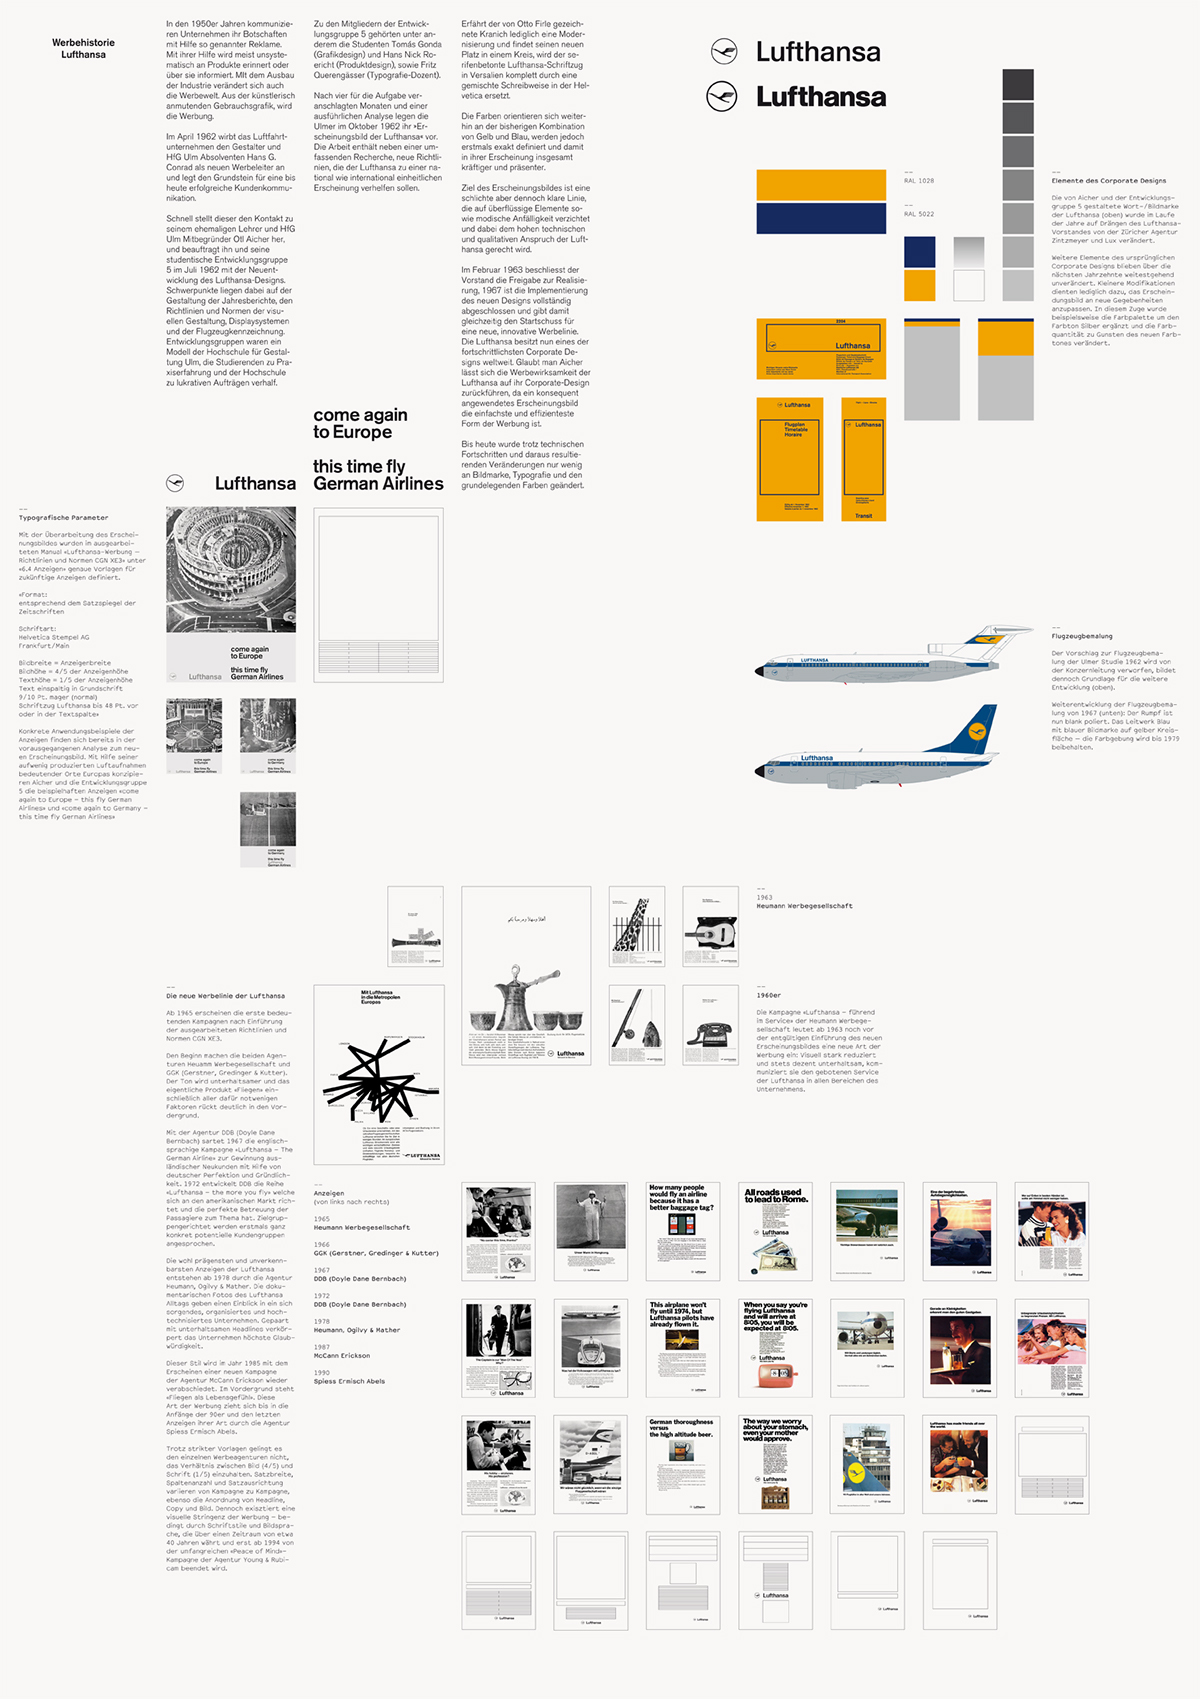 Lufthansa visual history